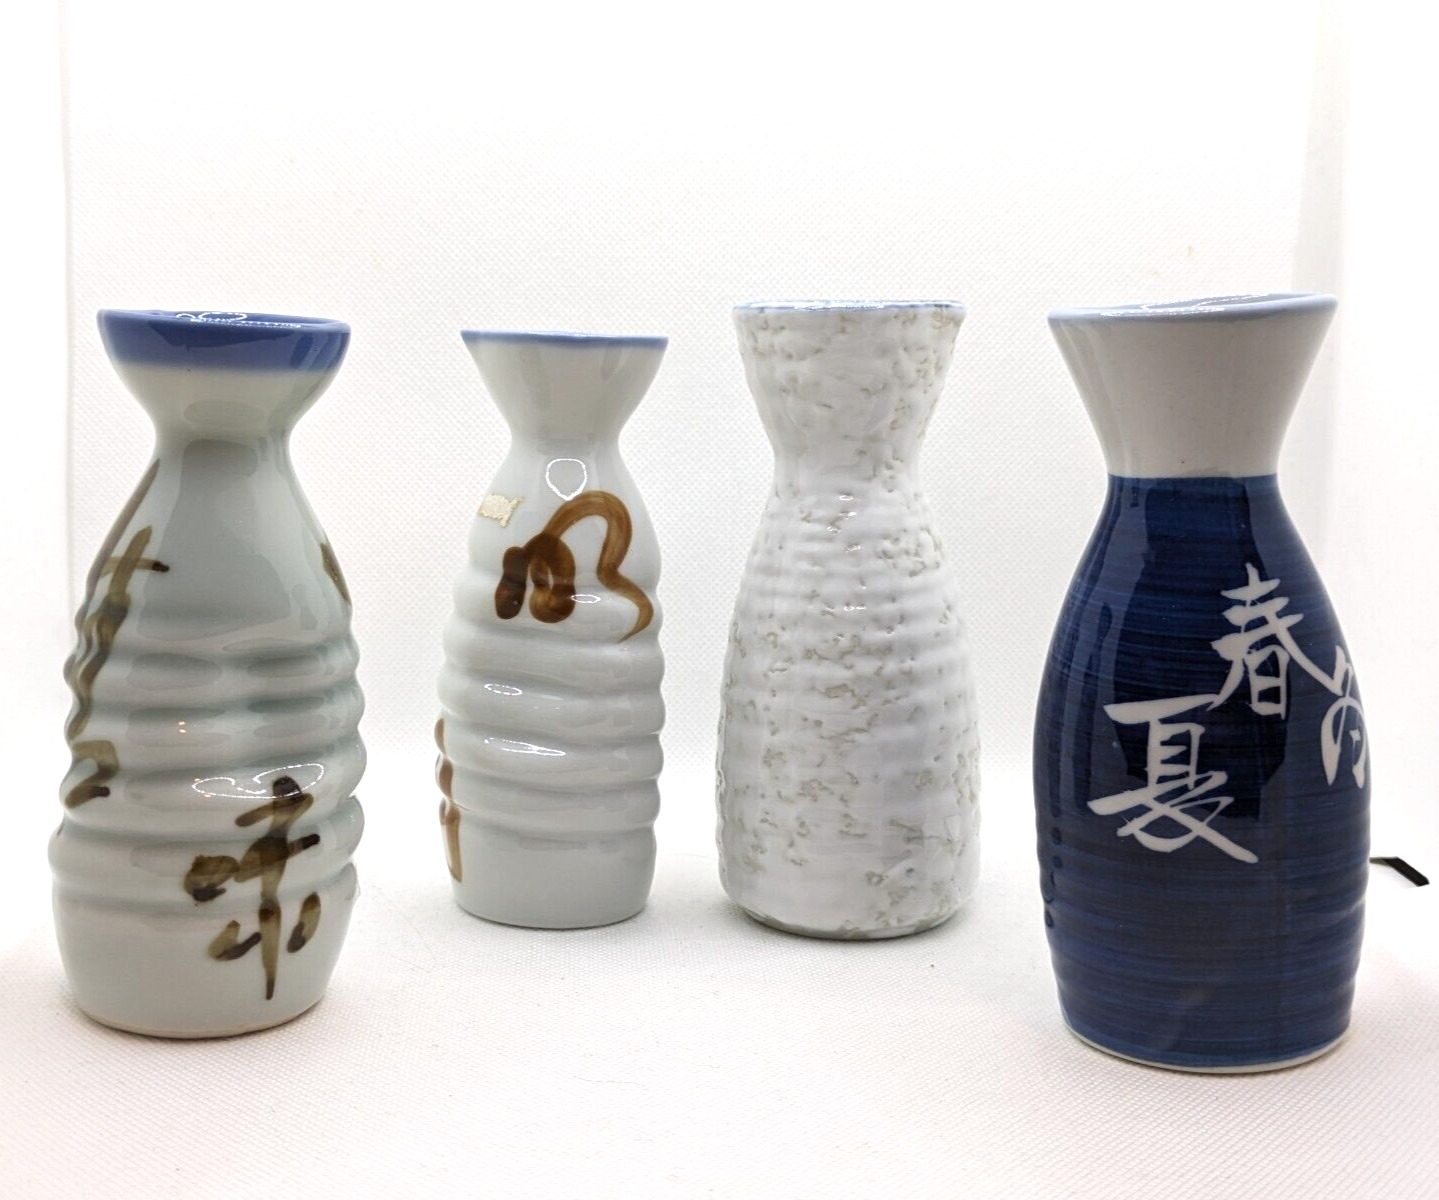 Set of 4 Ceramic Sake Bottles Blue and White, all different coordinating designs